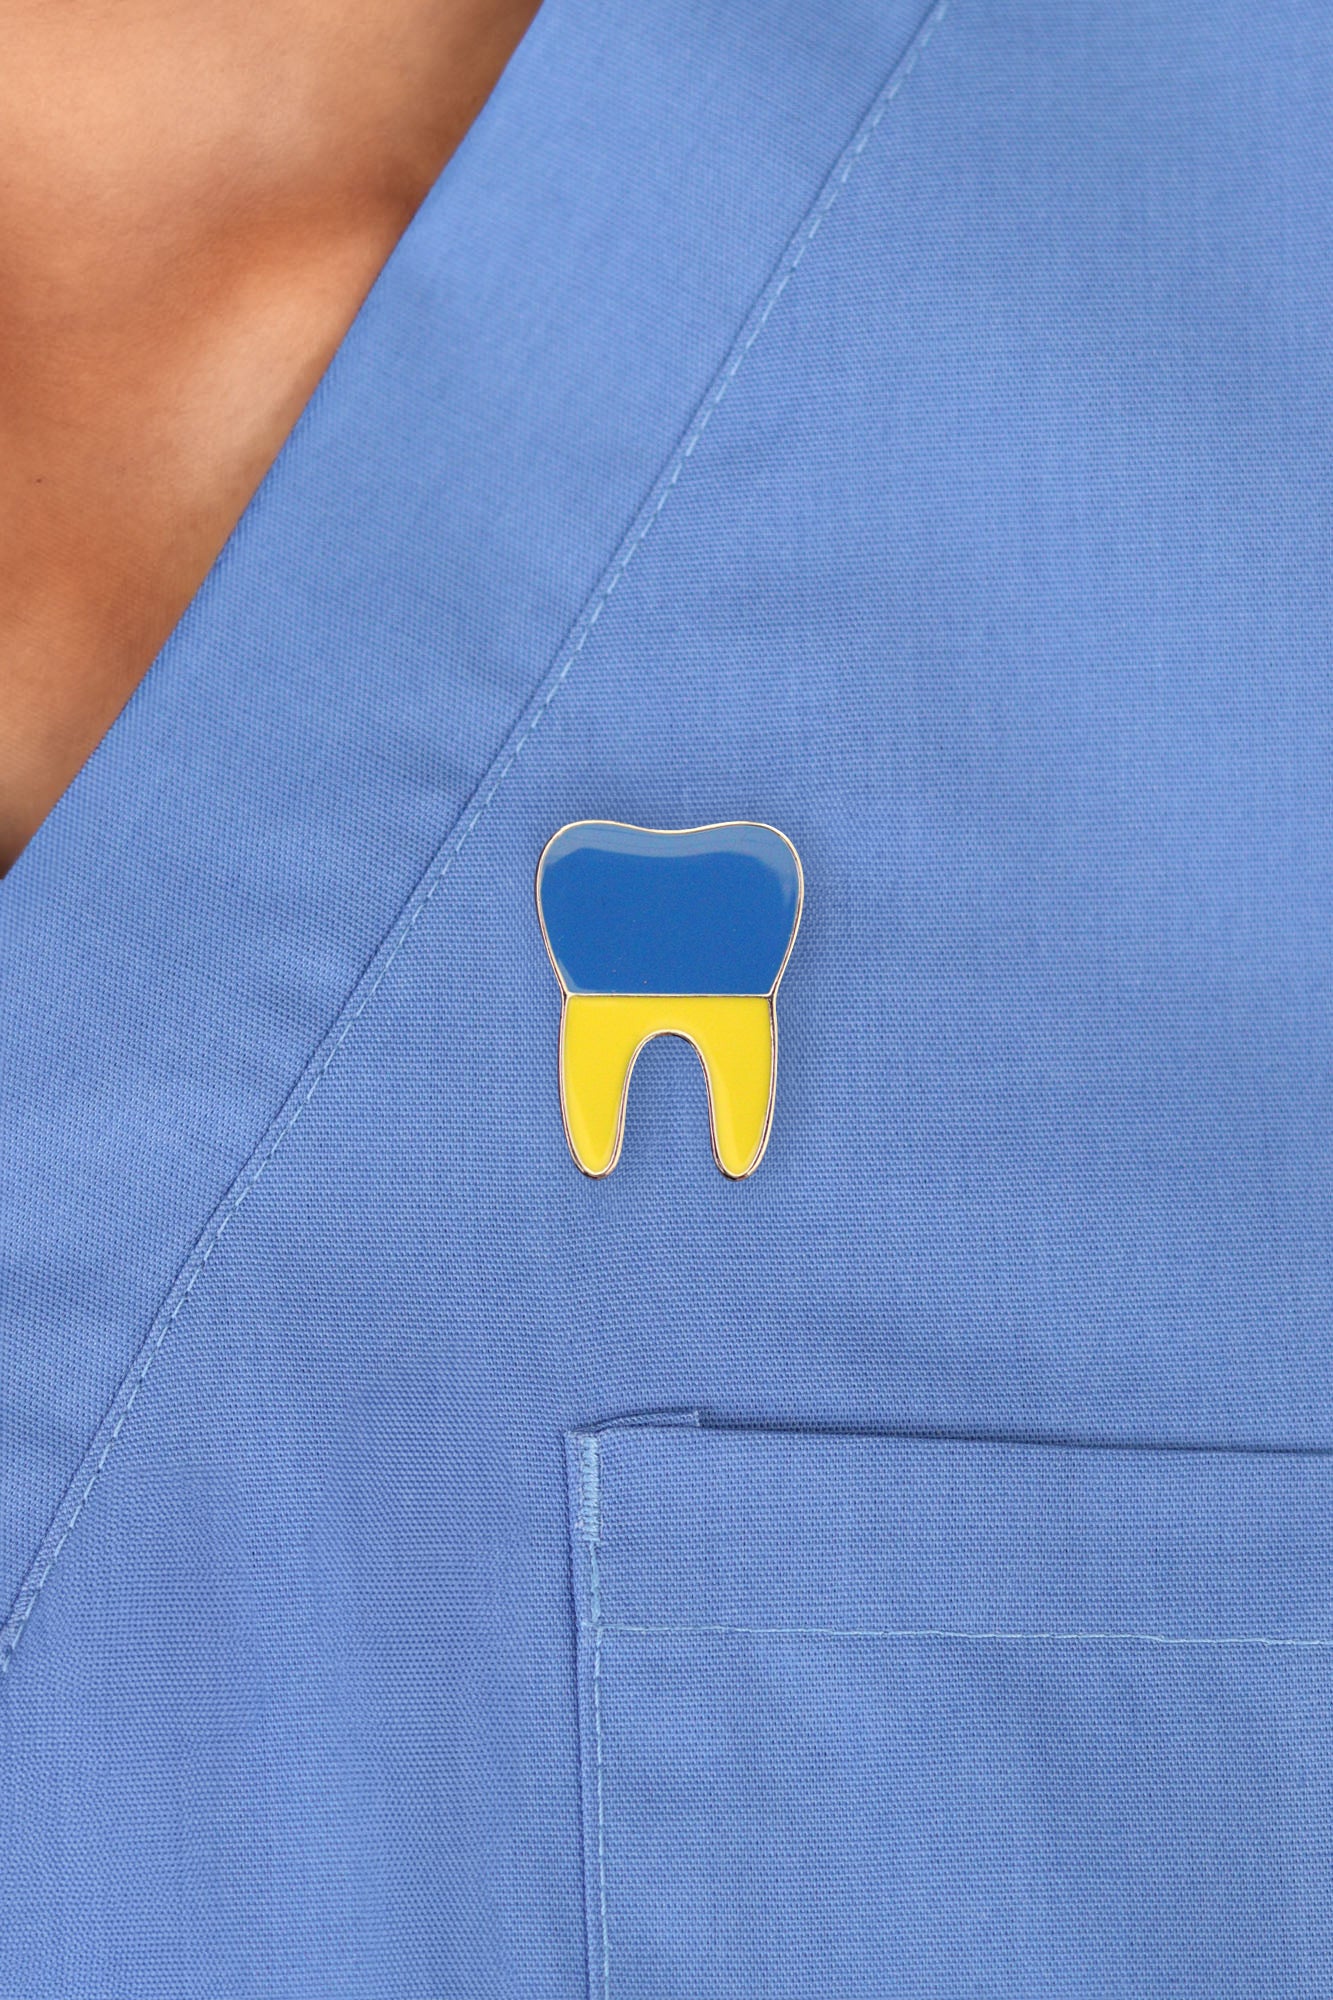 Ukraine Tooth Pin